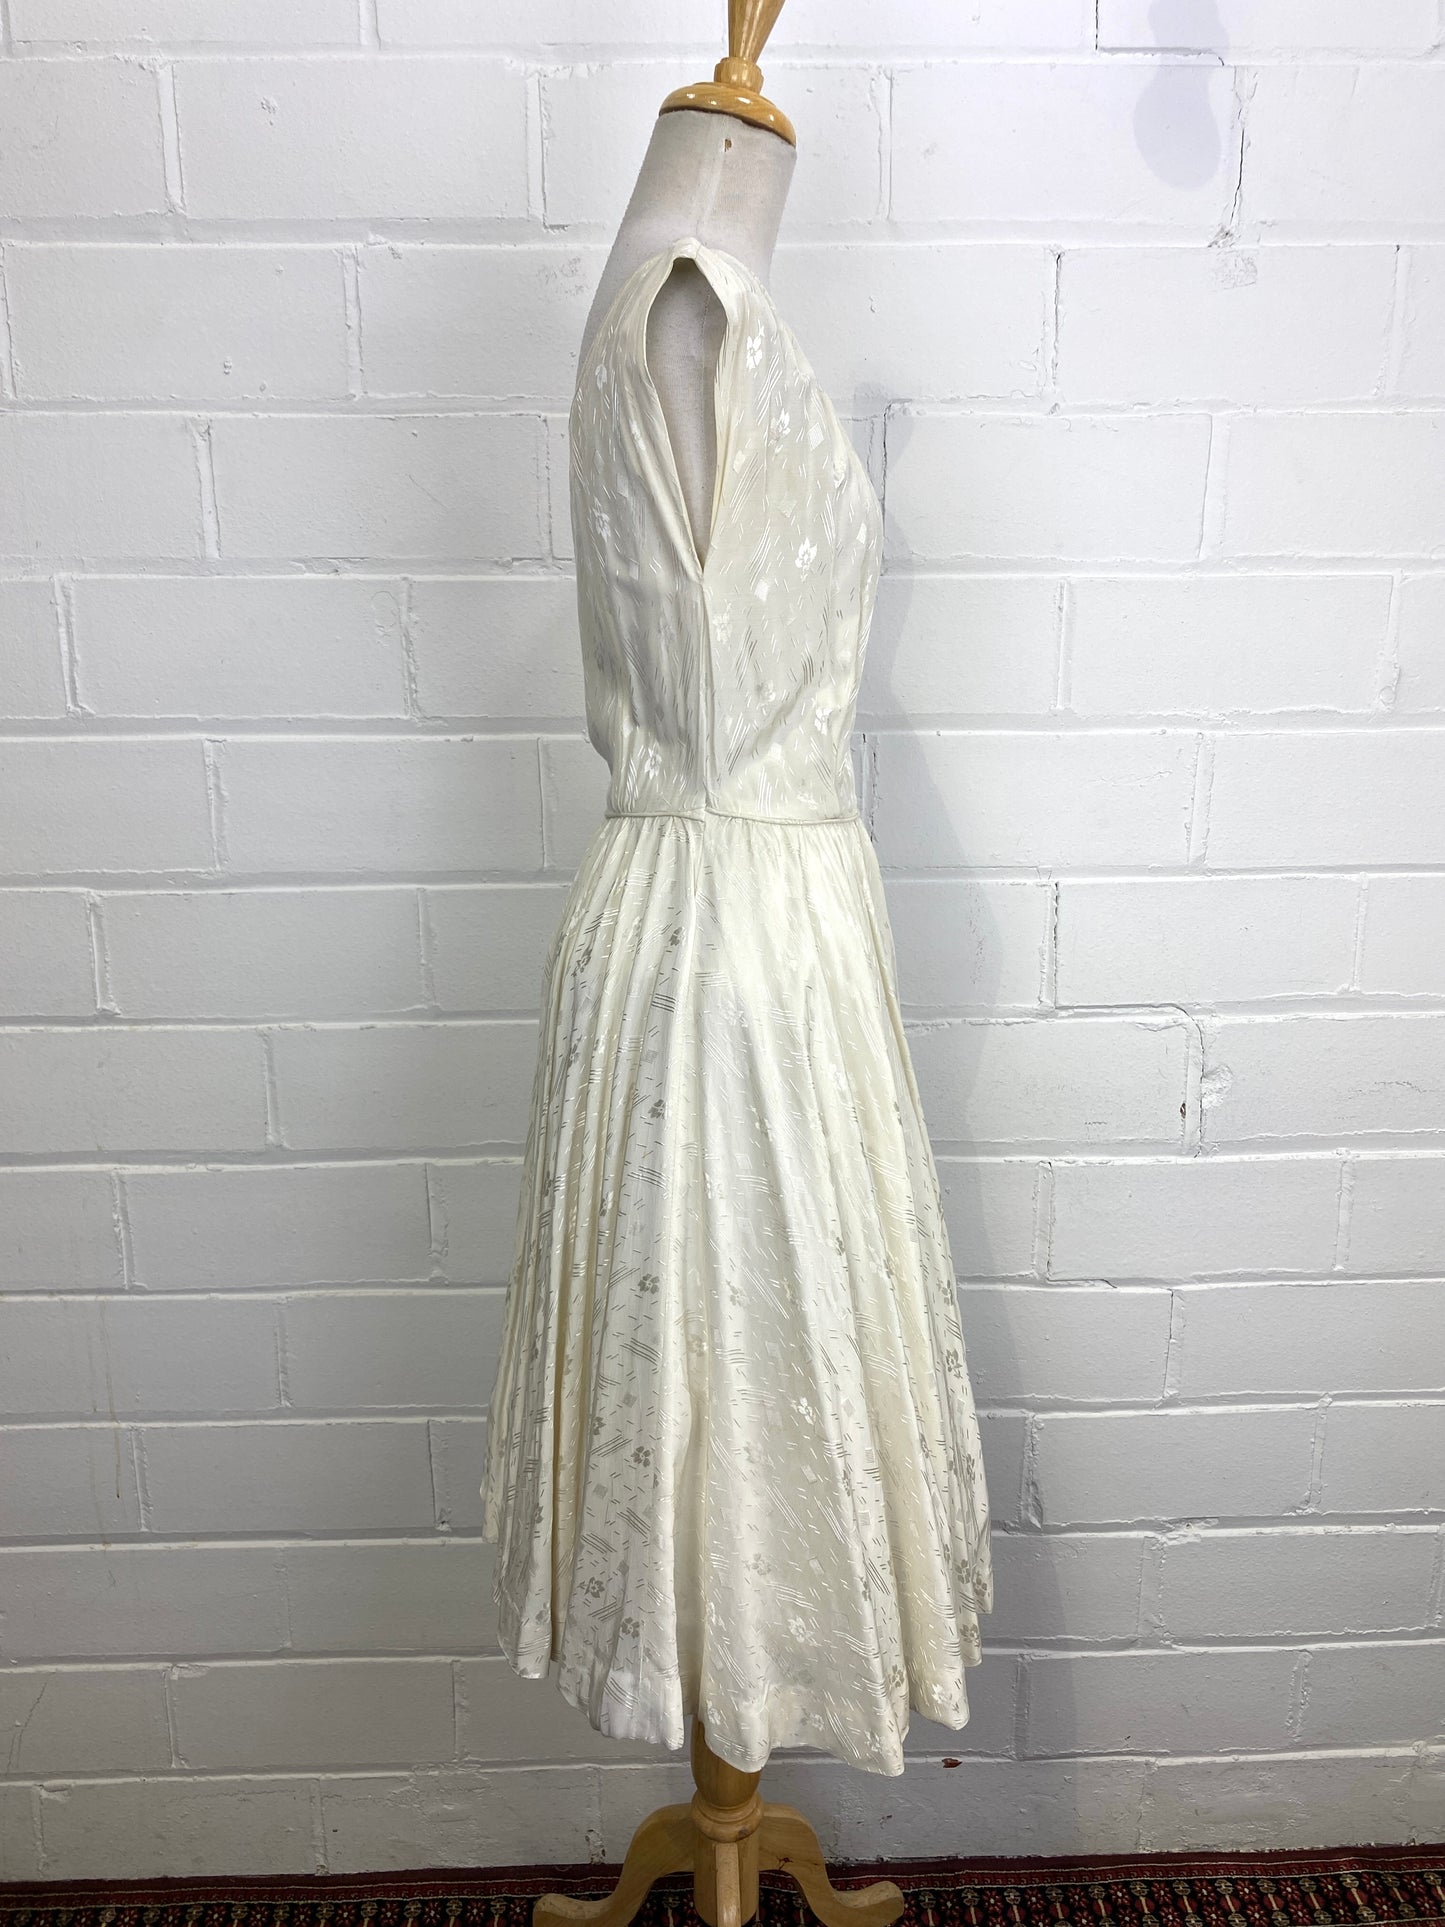 Vintage 1950s White Jacquard Tea Dress with Full Skirt, Small